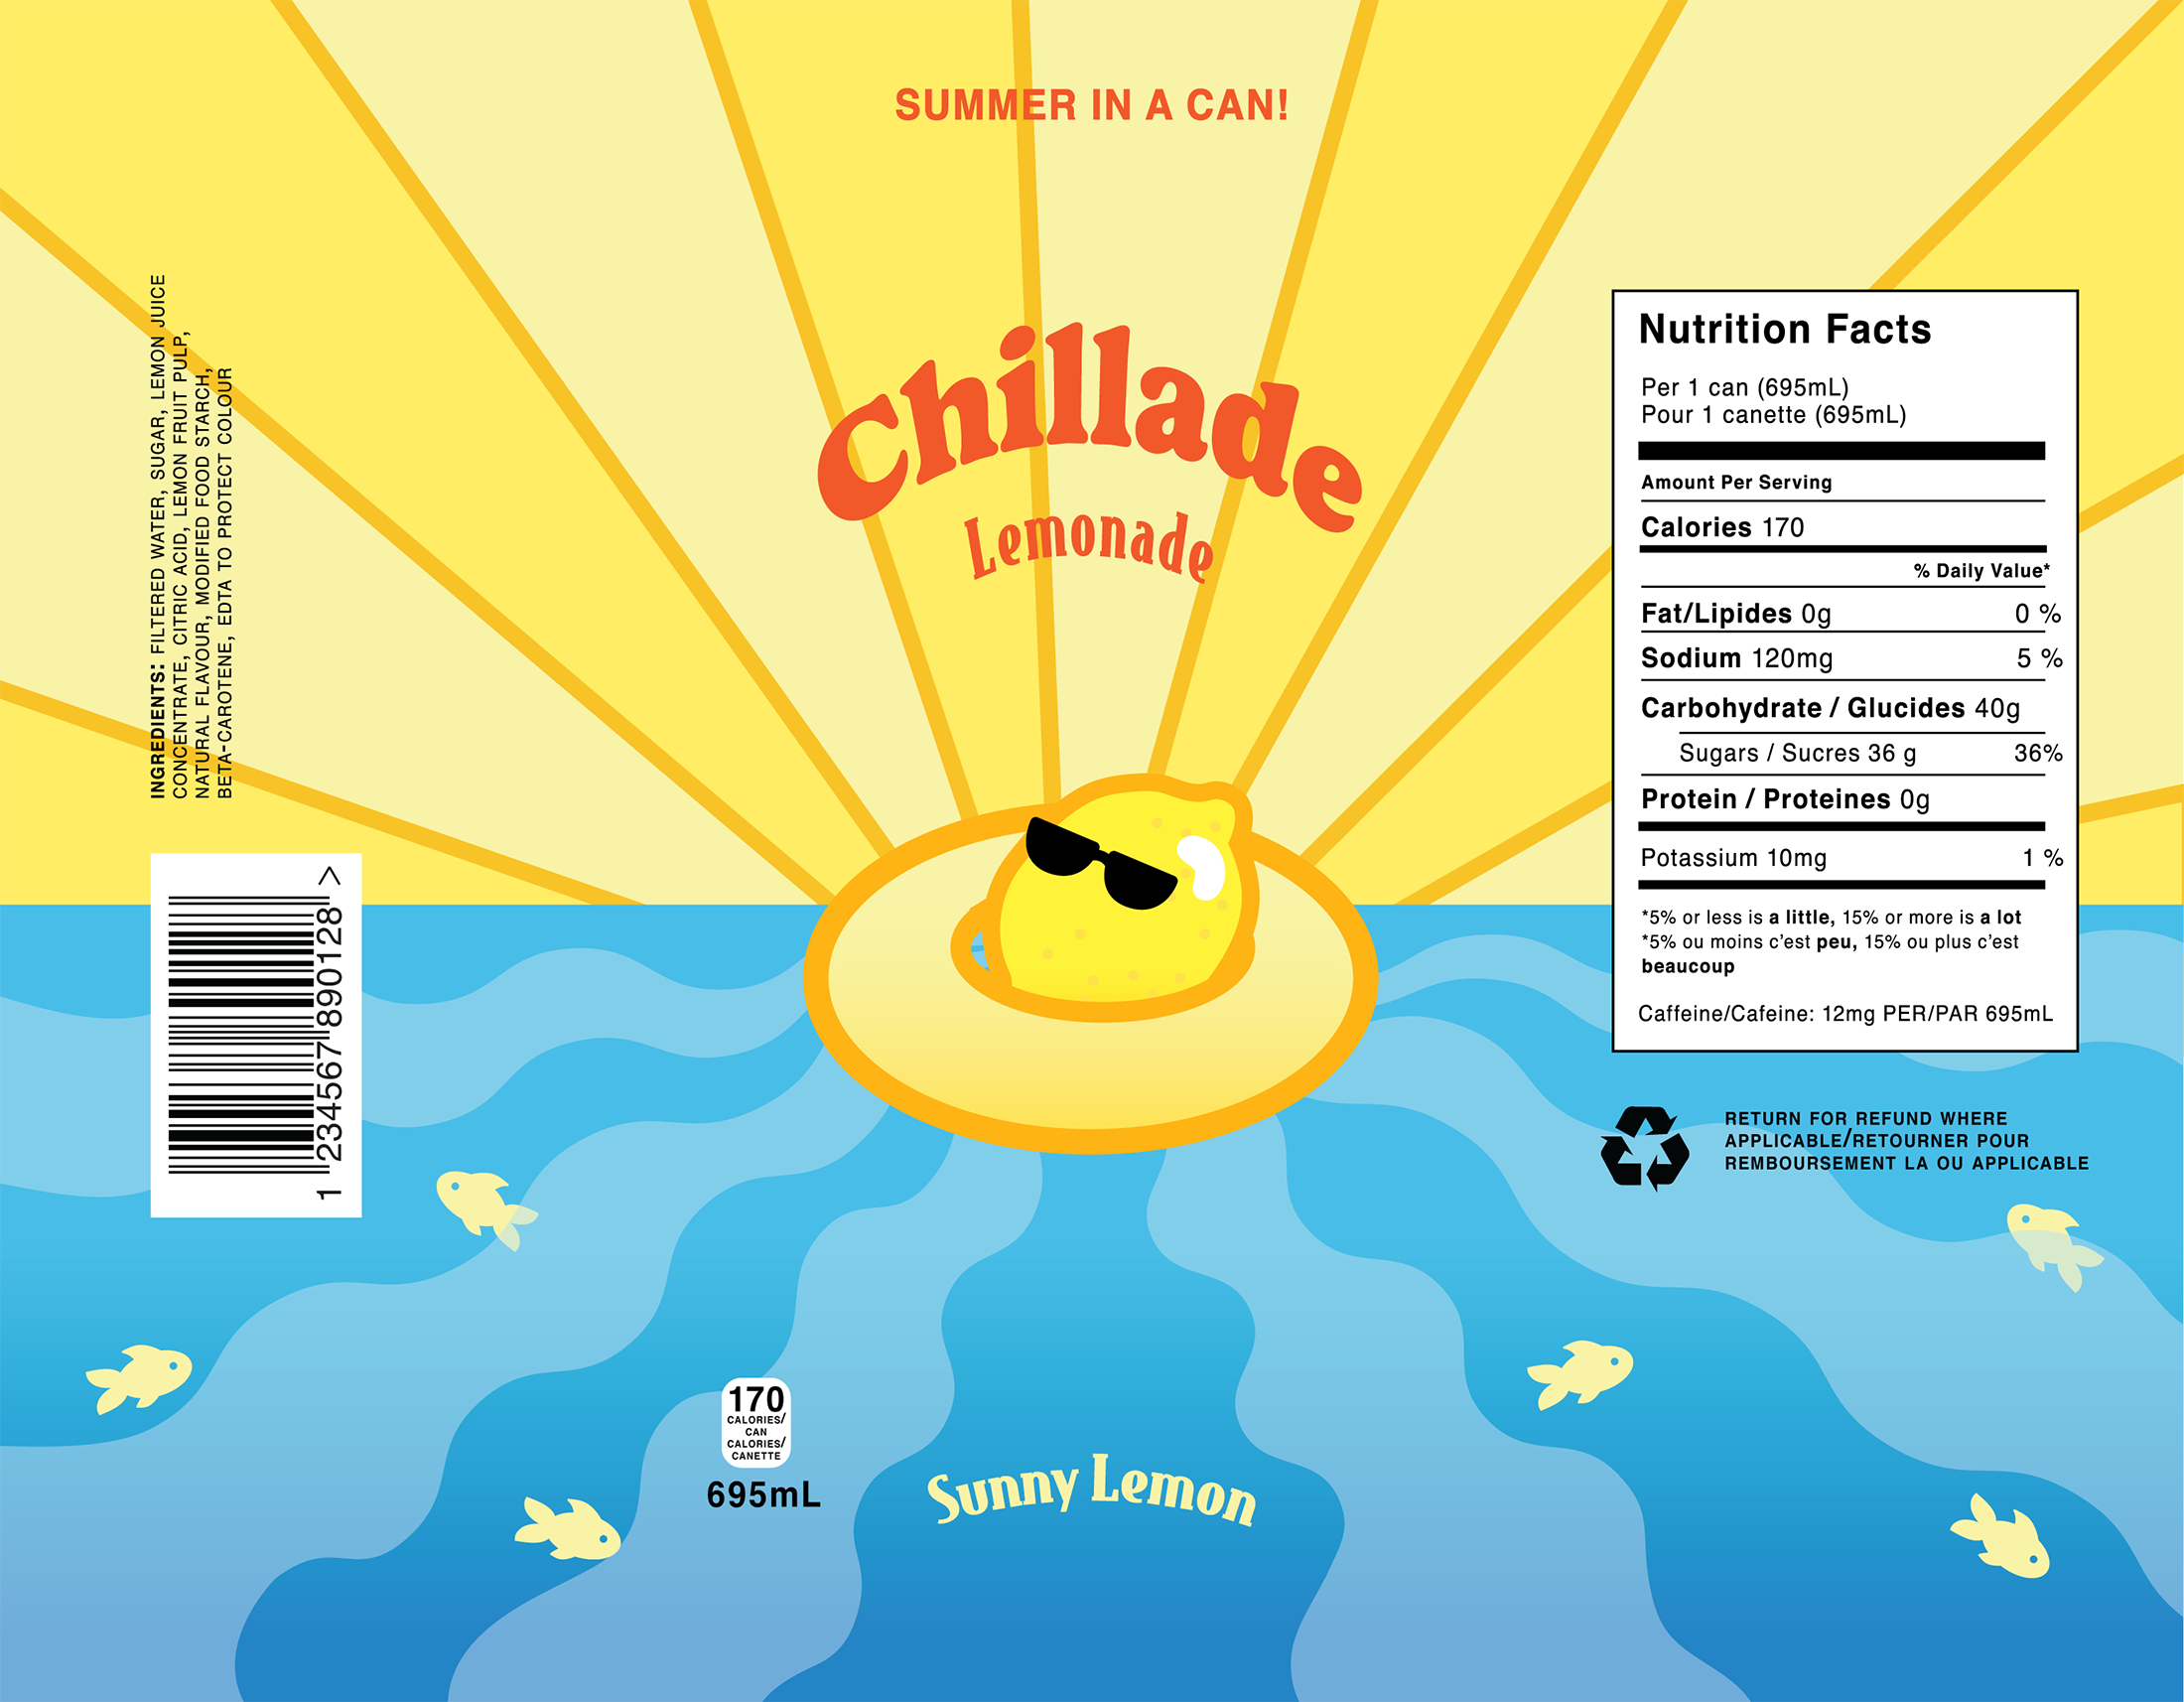 Product Packaging - Chillade Lemonade - Image 2